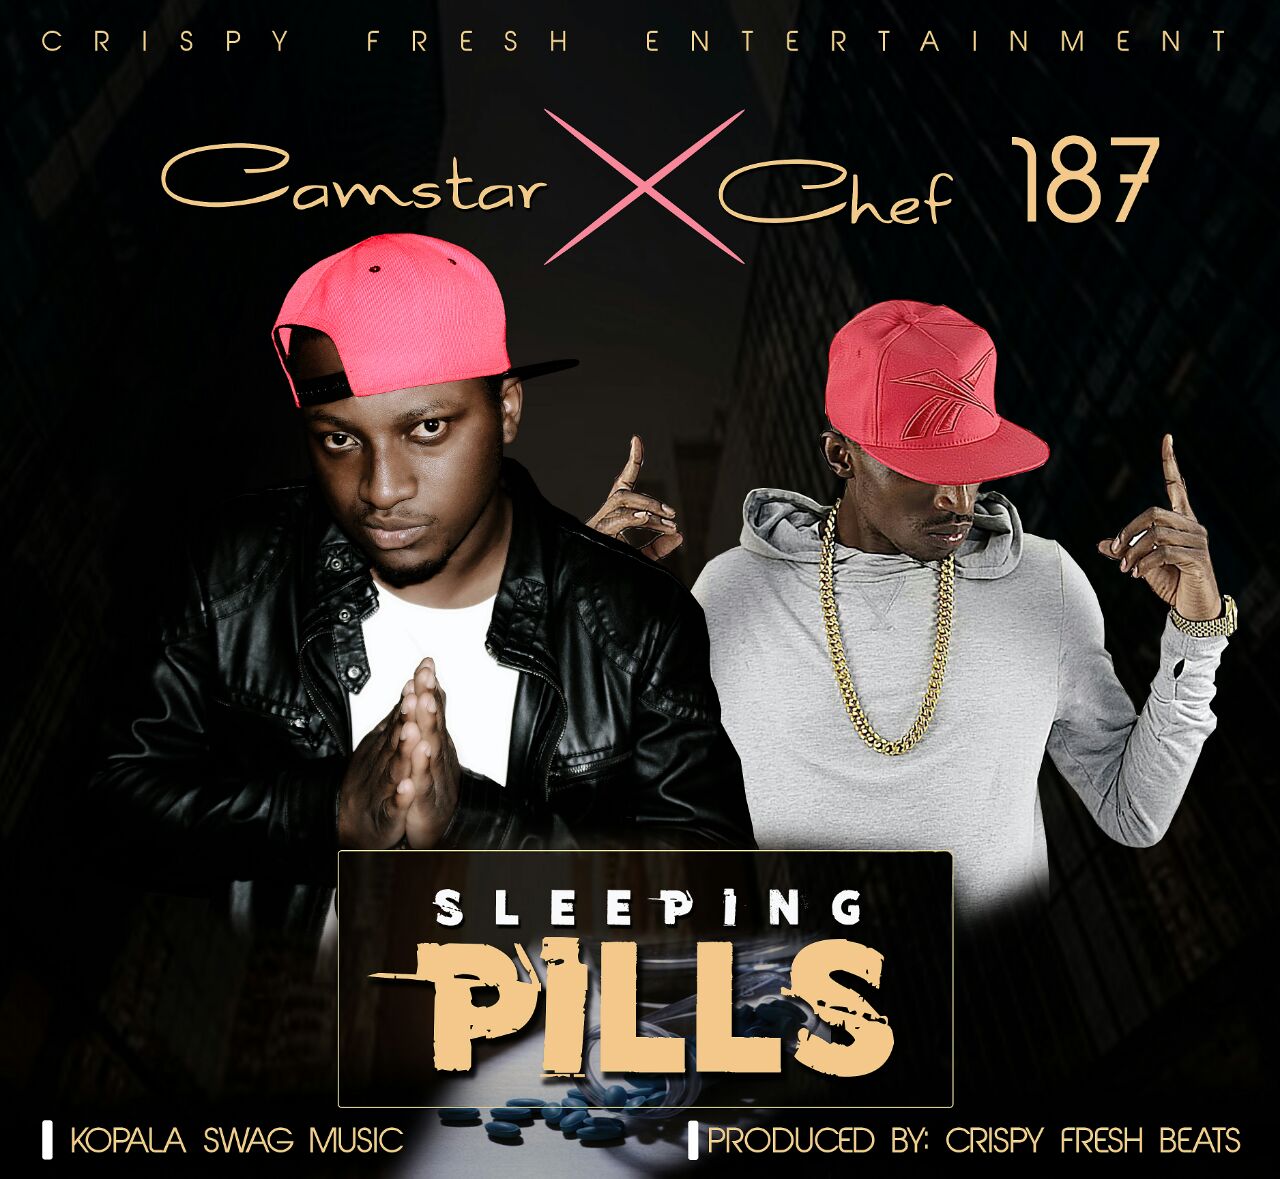 Camstar Ft. Chef 187 - Sleeping Pills - Zambian Music Blog